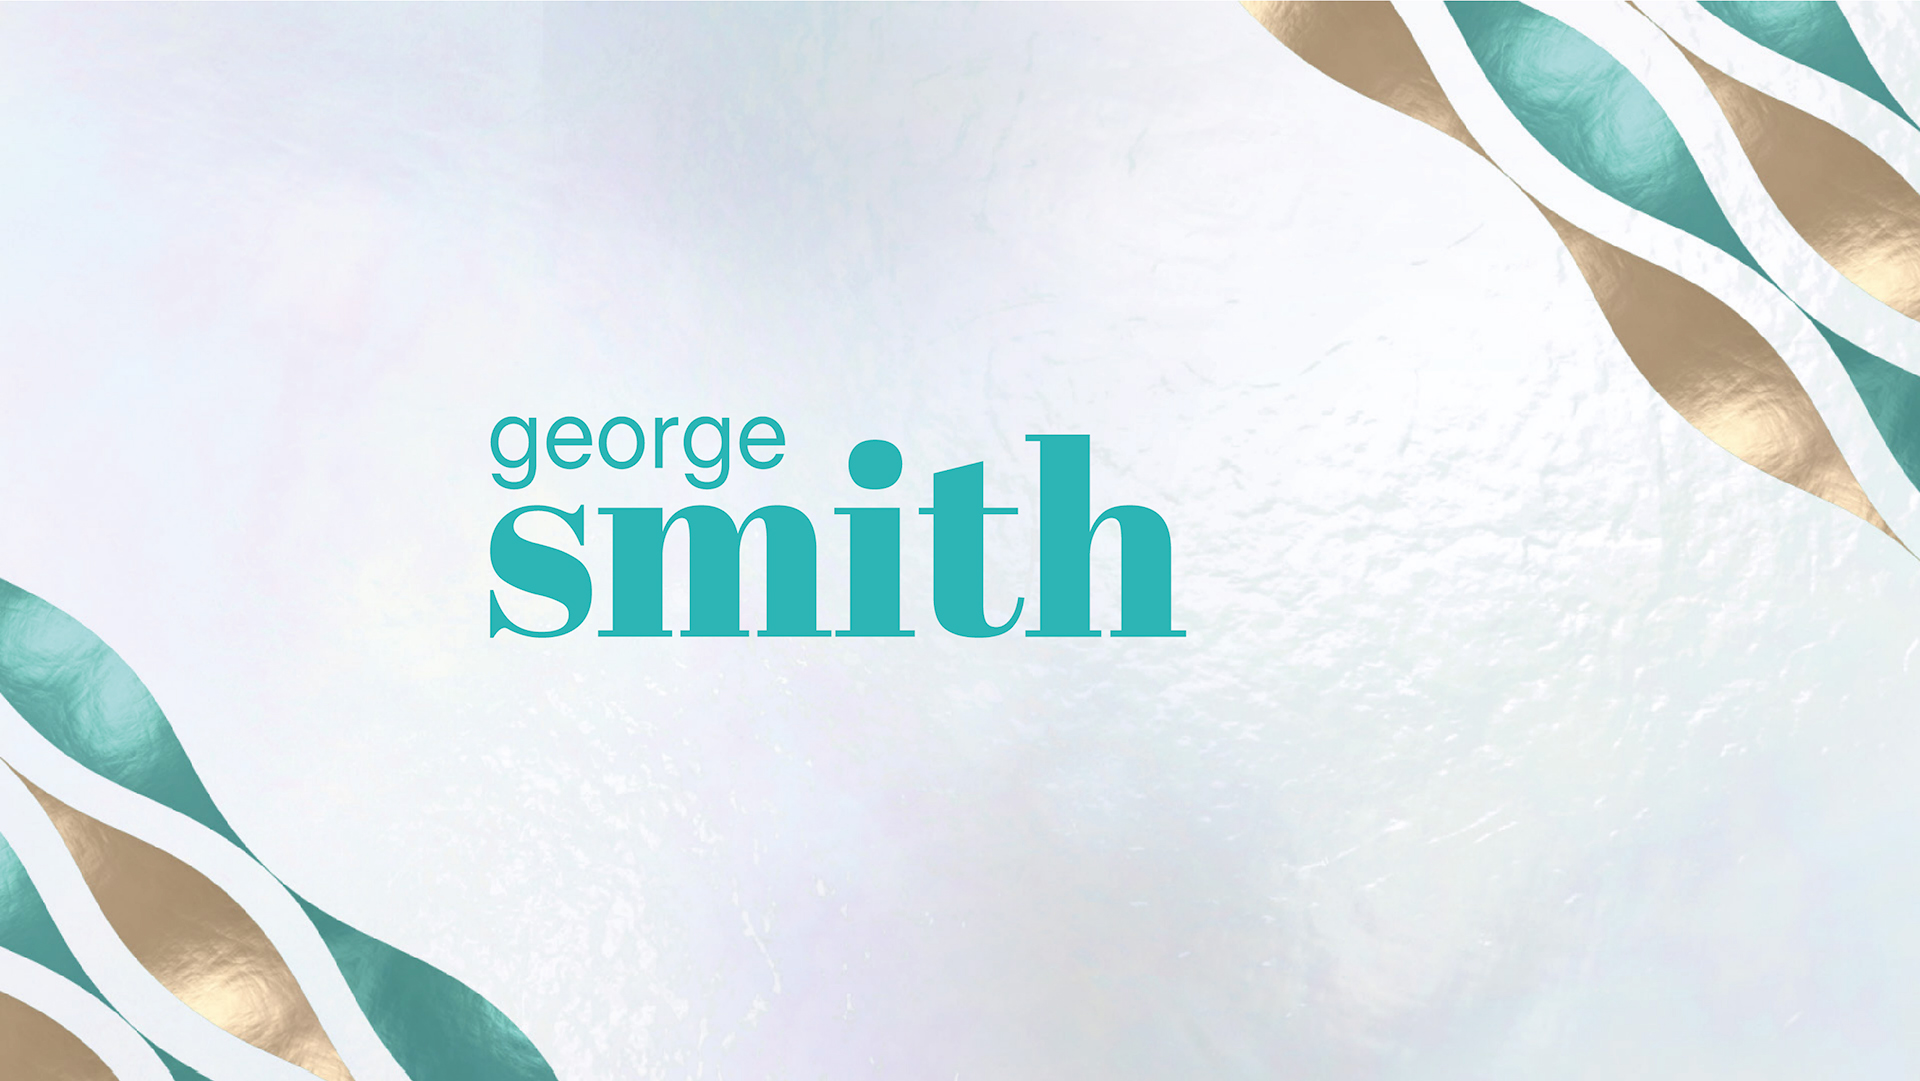 George Smith | Graphic Design 4